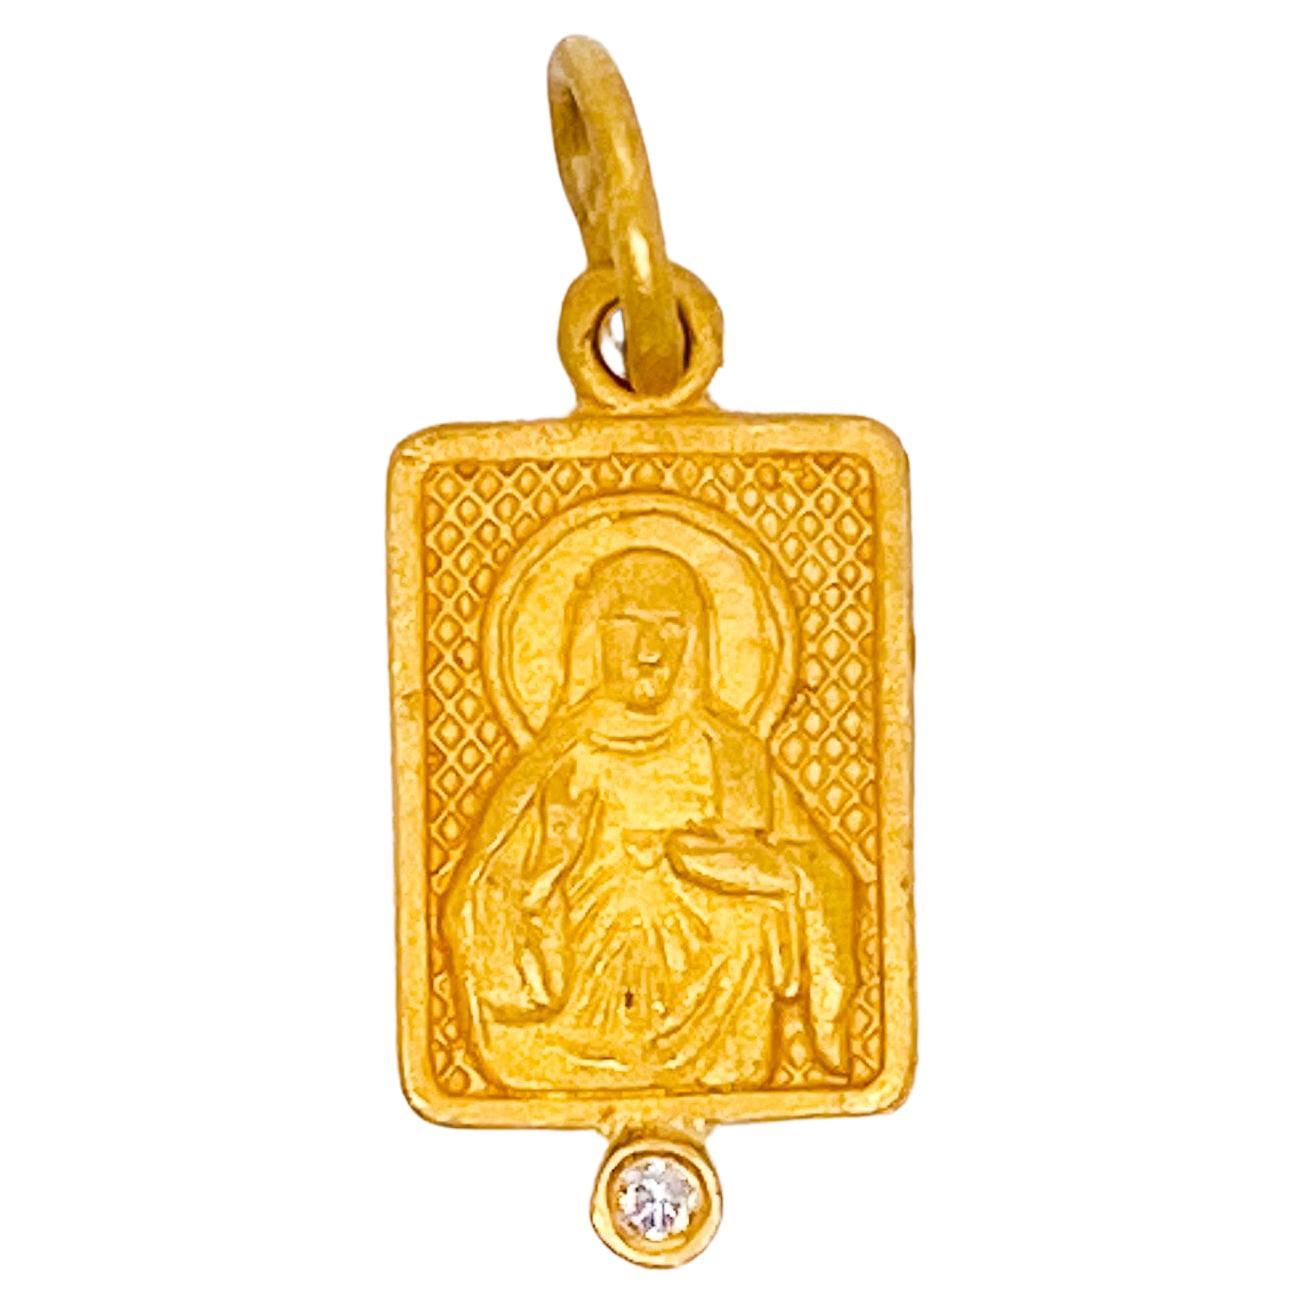 Immaculate Sacred Heart of Jesus Charm 24 Karat Yellow Gold Catholic Pendant